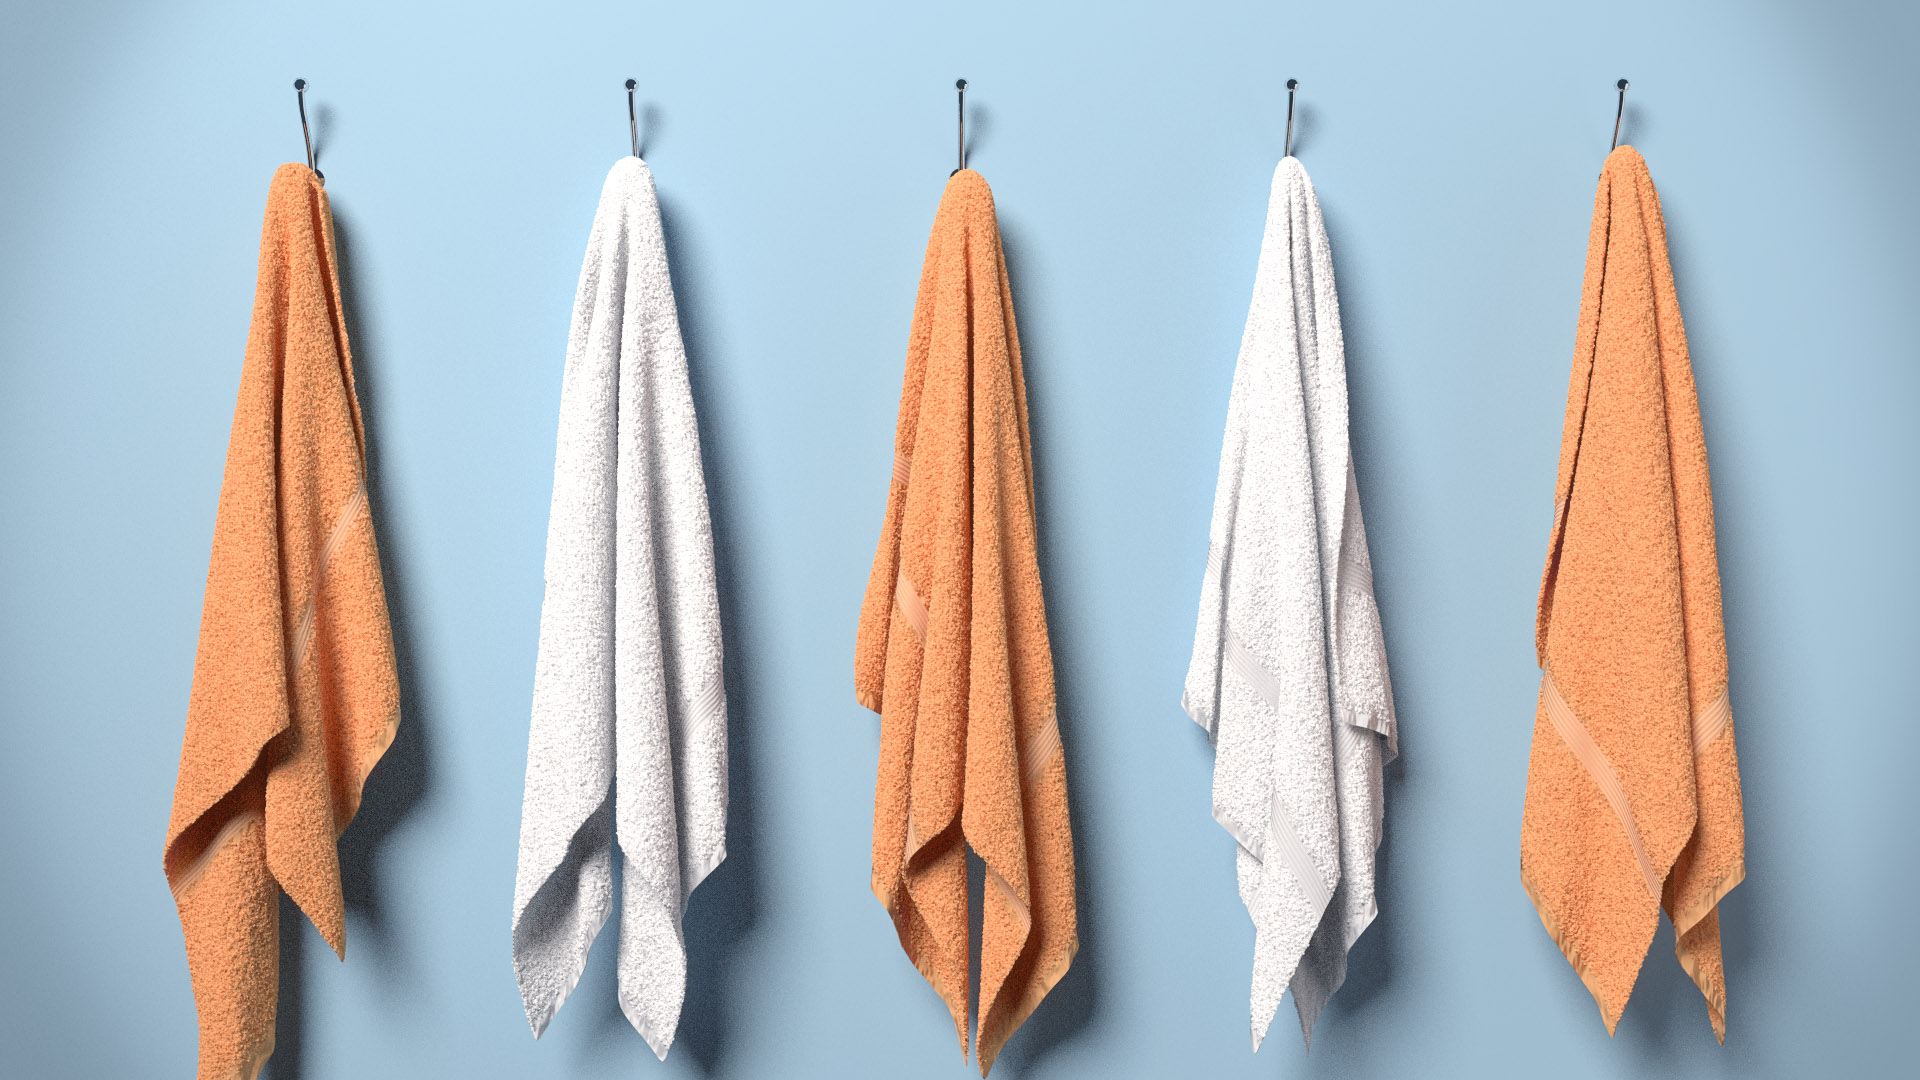 https://www.blendernation.com/wp-content/uploads/2014/04/towels-tutorial.jpg